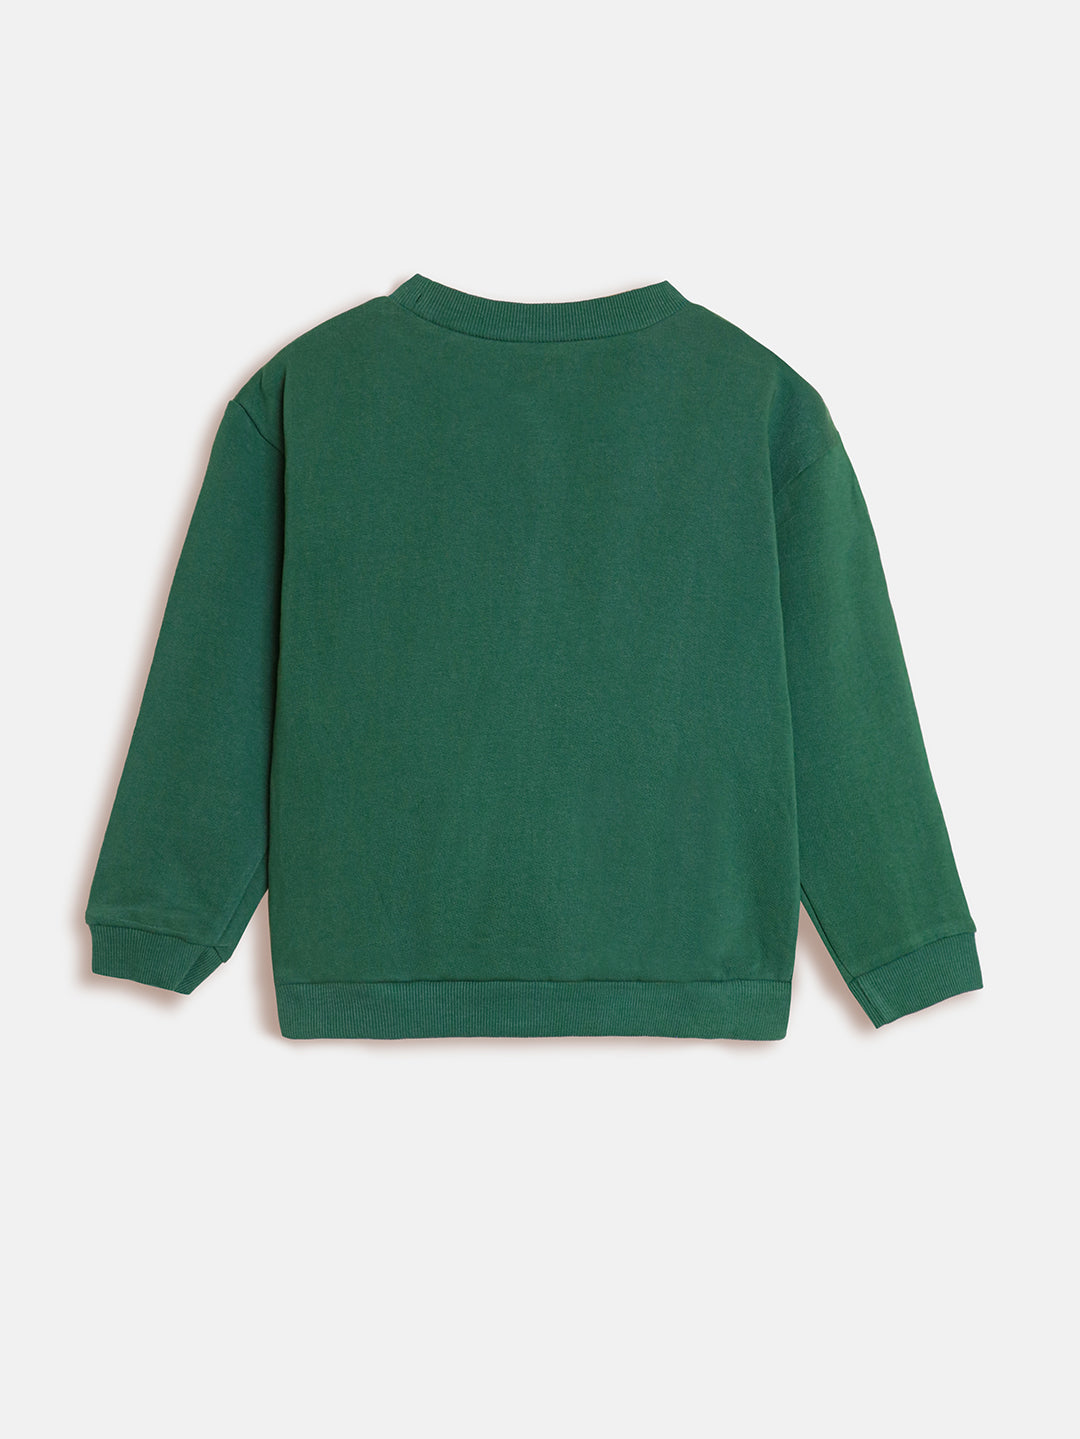 Green Sweatshirt and Green Joggers